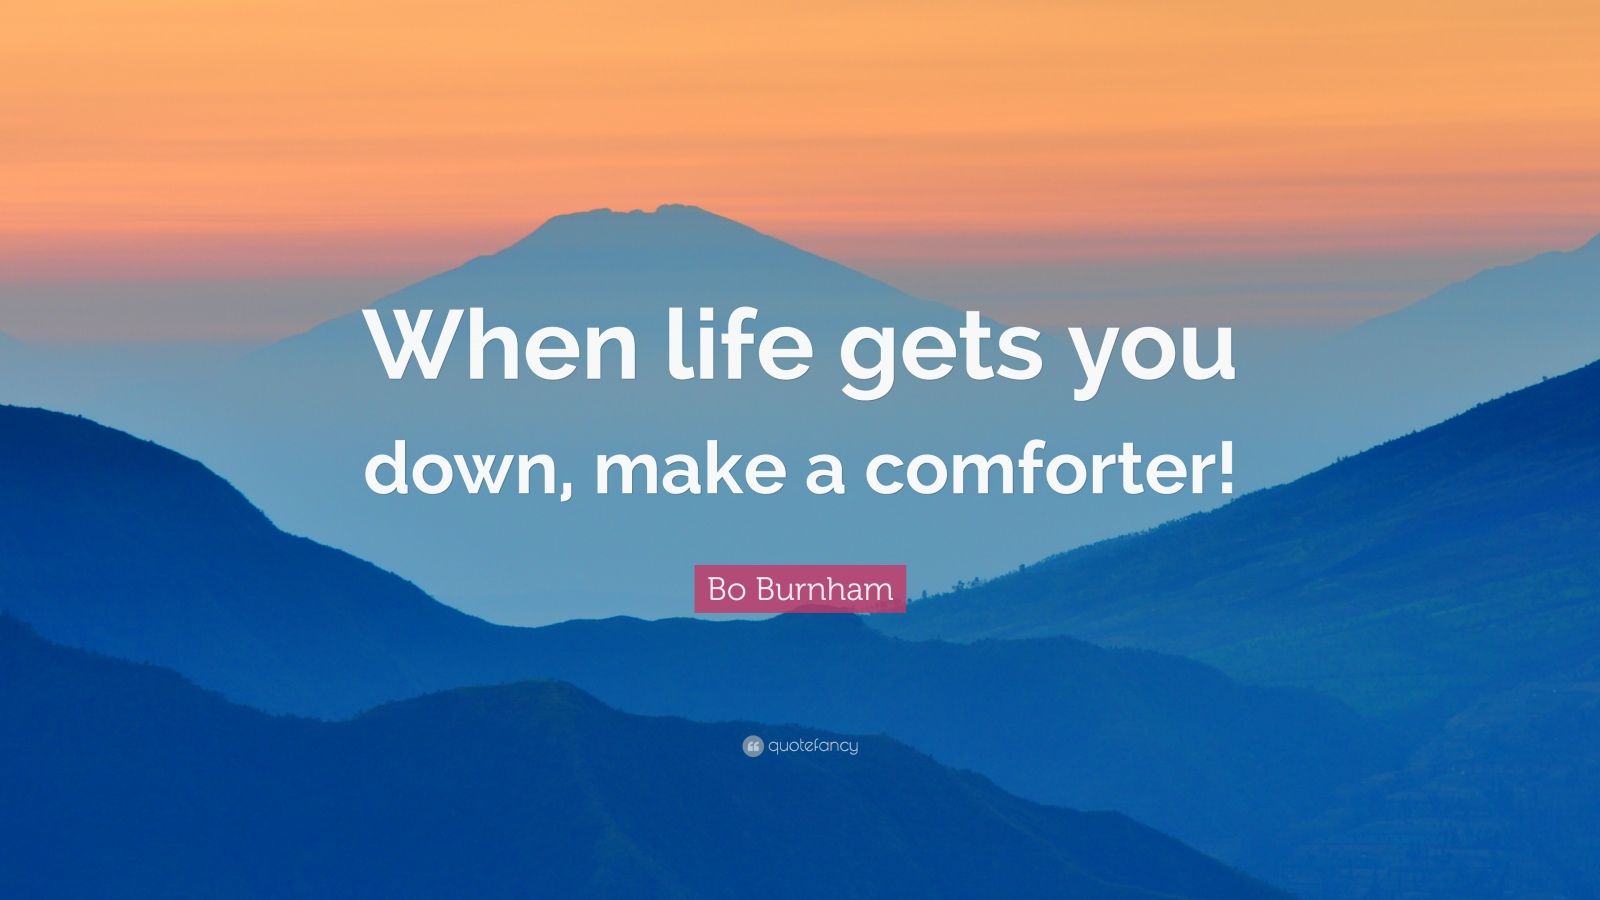 Bo Burnham Quote “When life s you down make a forter ”